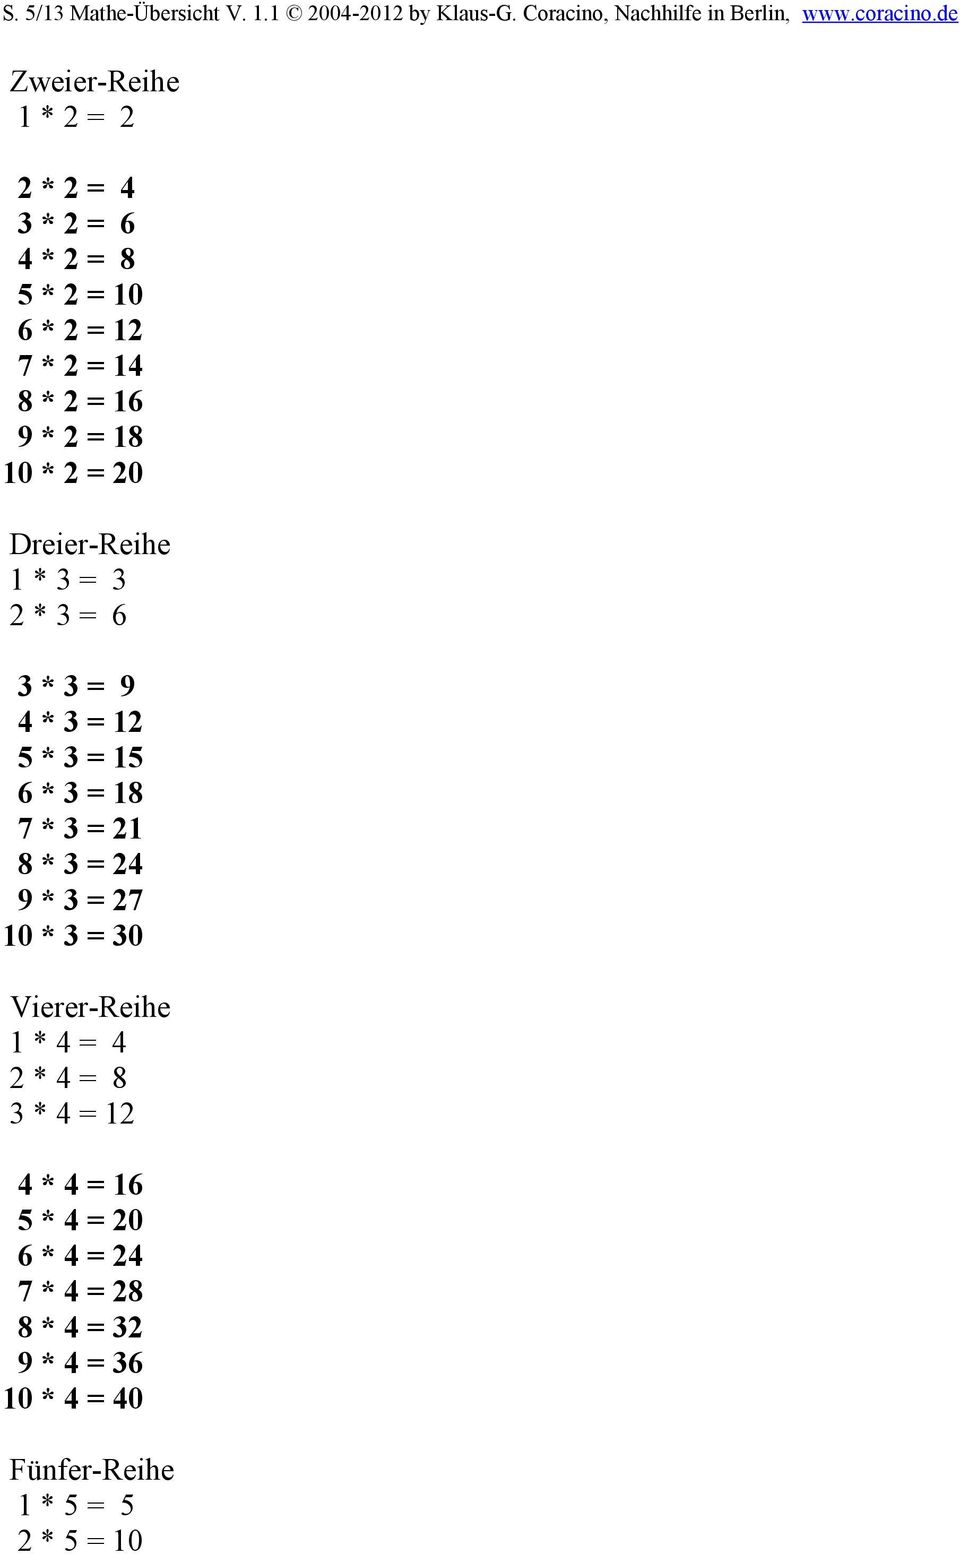 Dreier-Reihe 1 * 3 = 3 2 * 3 = 6 3 * 3 = 9 4 * 3 = 12 5 * 3 = 15 6 * 3 = 18 7 * 3 = 21 8 * 3 = 24 9 * 3 = 27 10 * 3 = 30